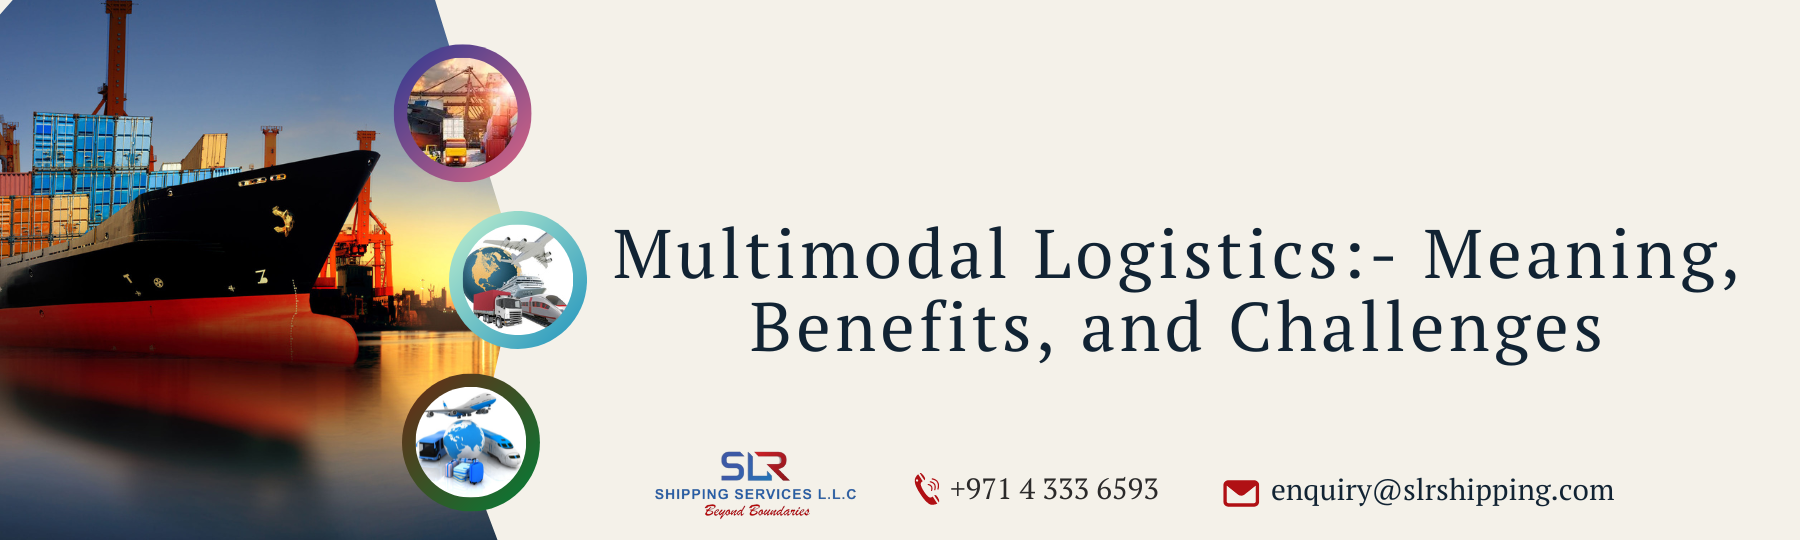 Multimodal Logistics